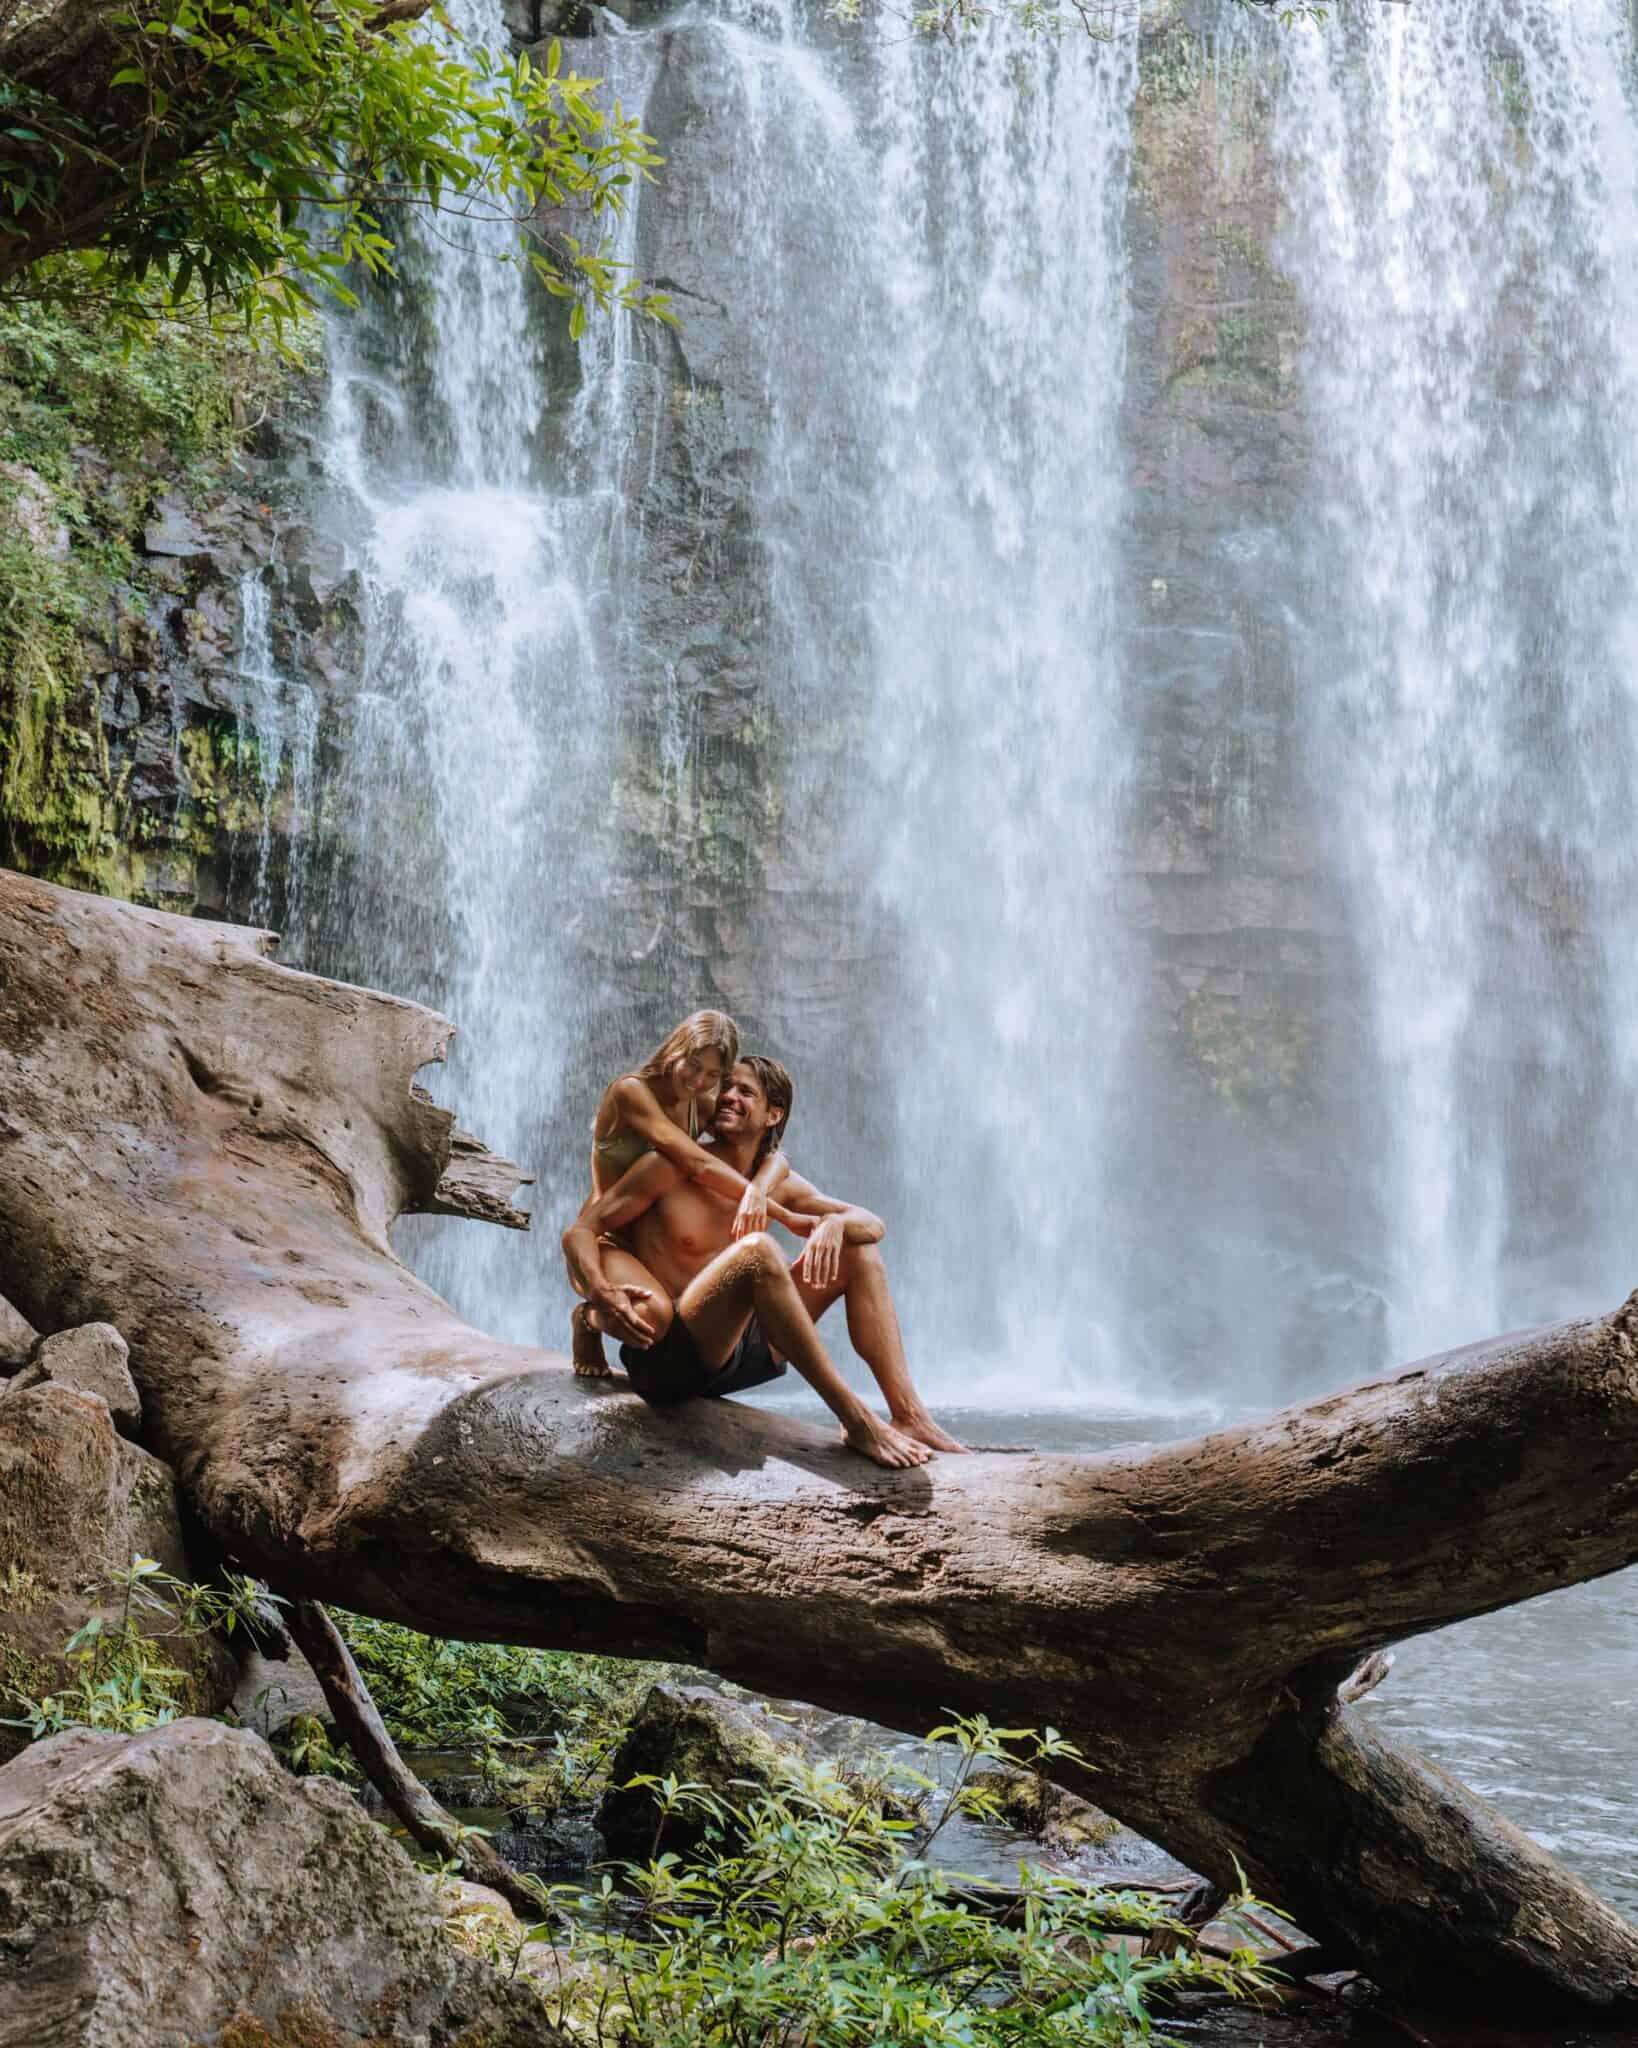 A couple enjoying a waterfall in Costa Rica.